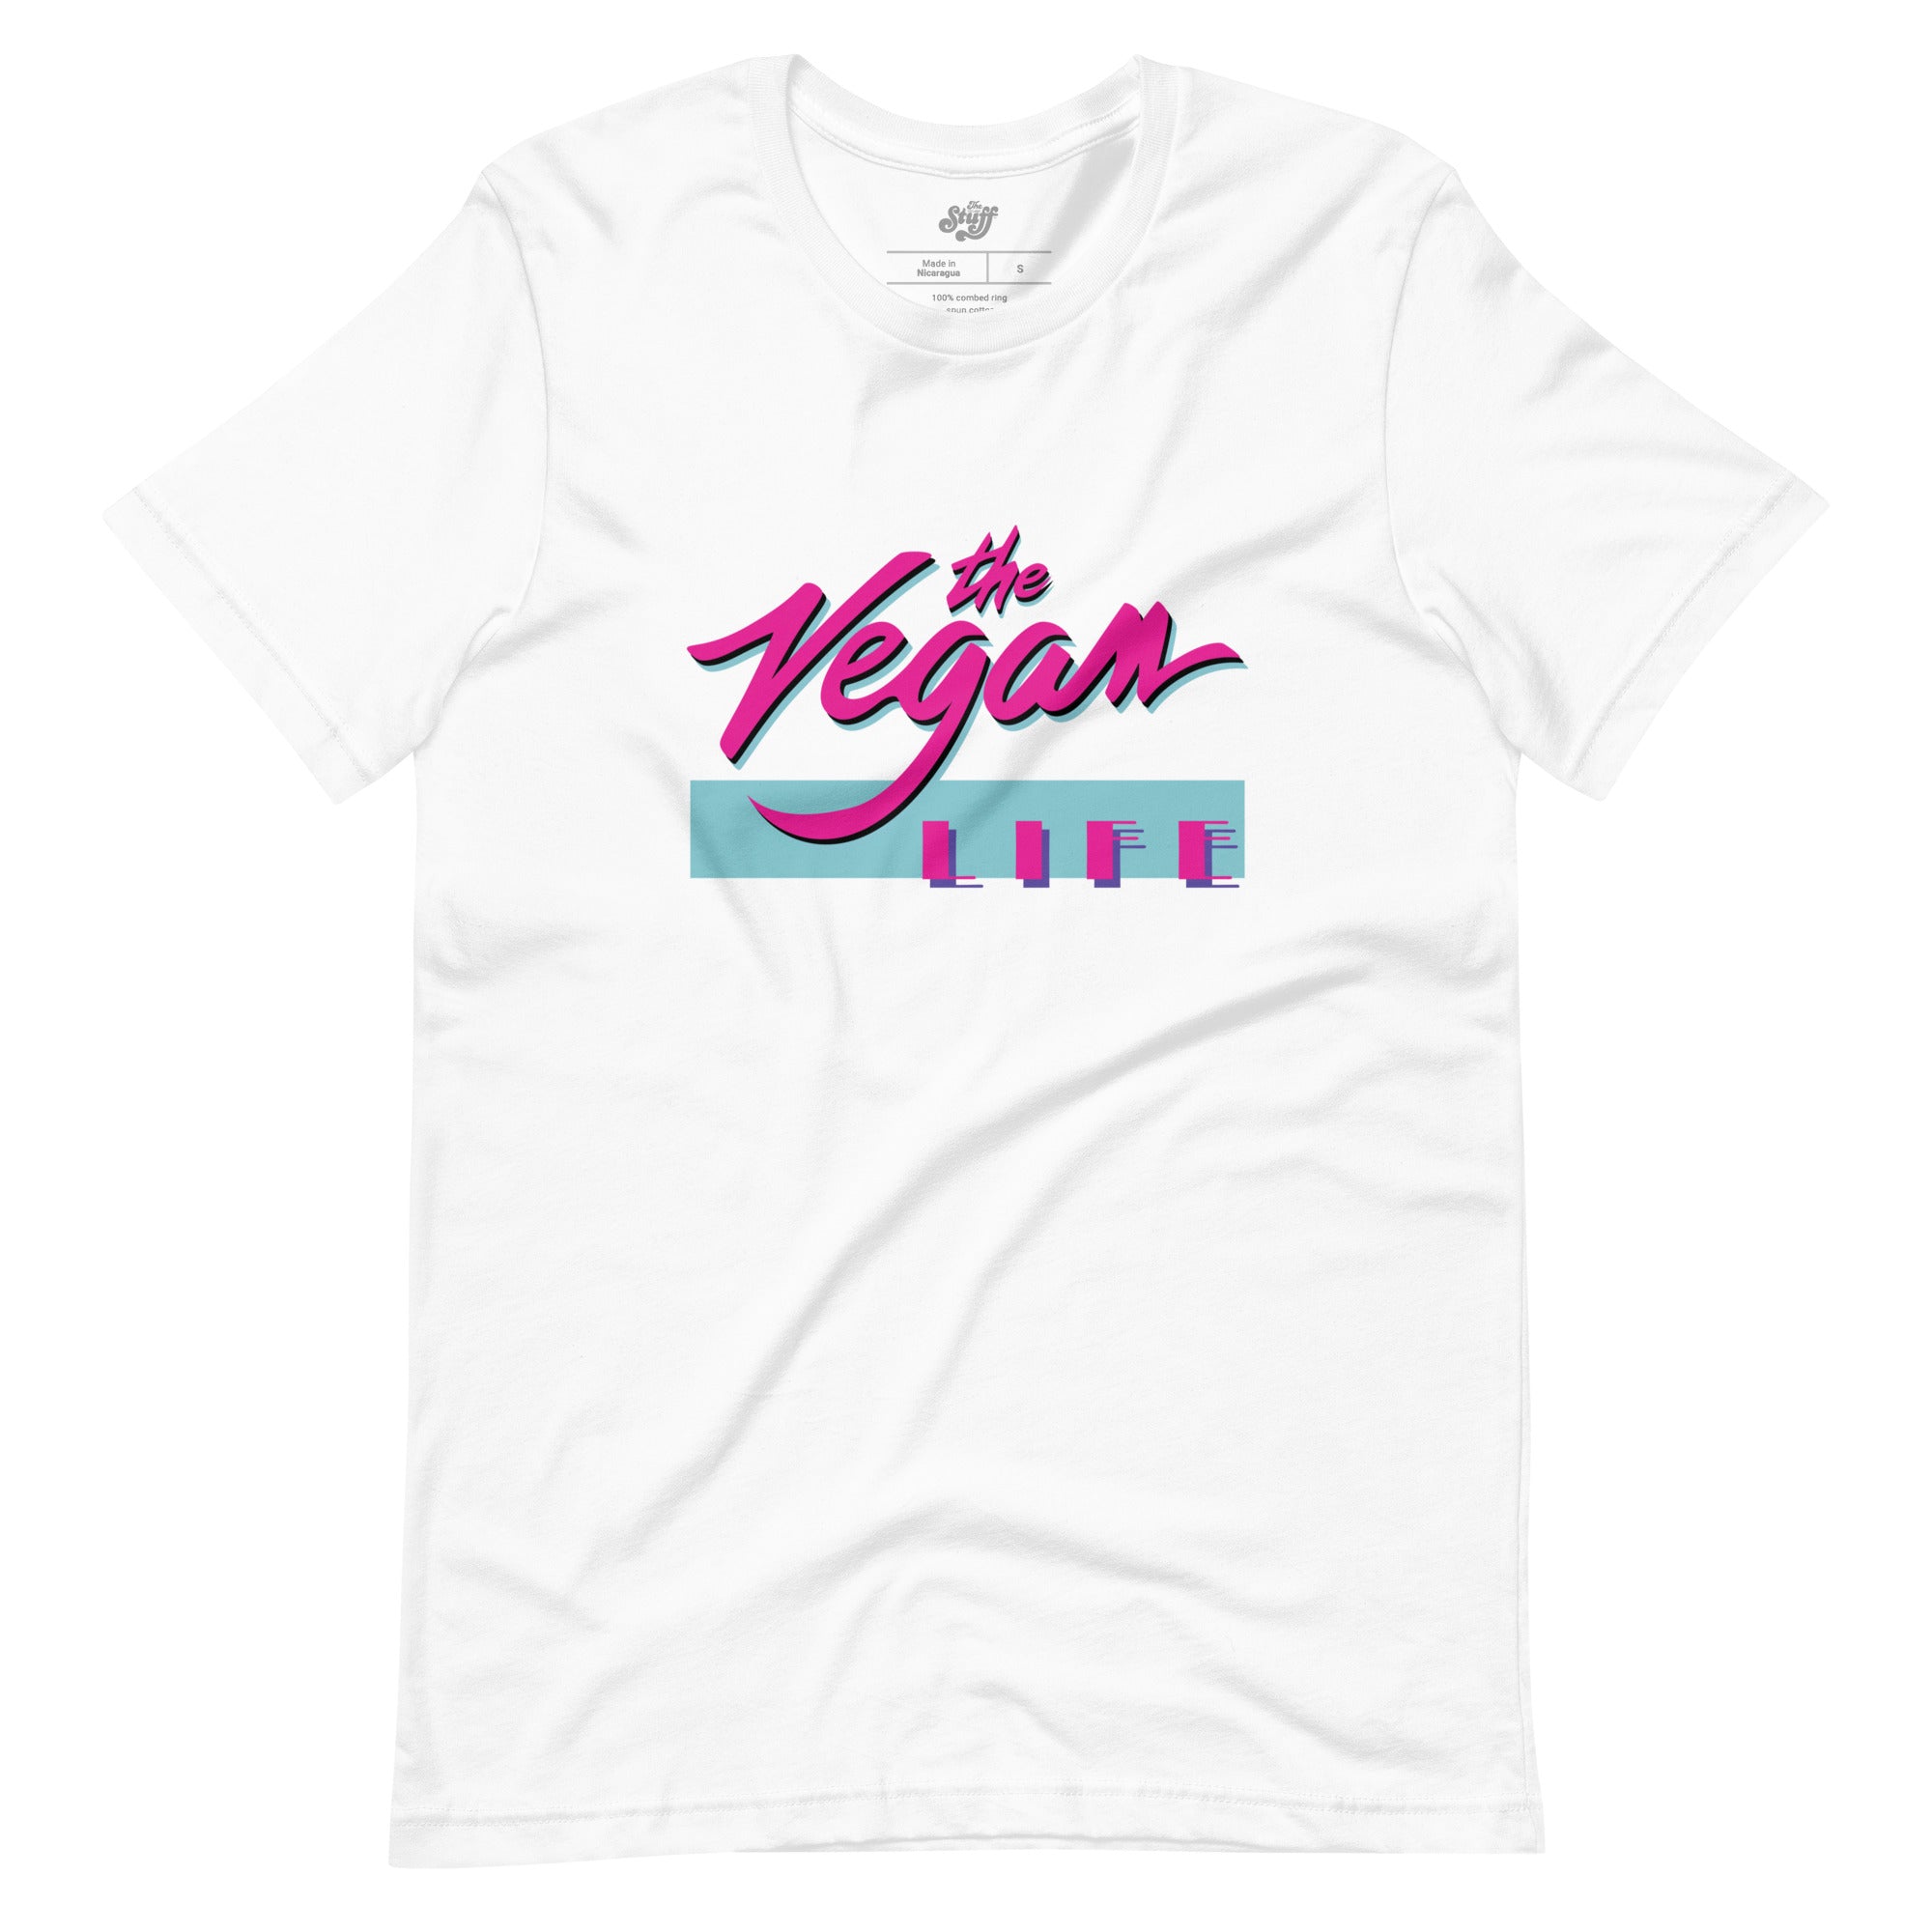 The Vegan Stuff T-shirt